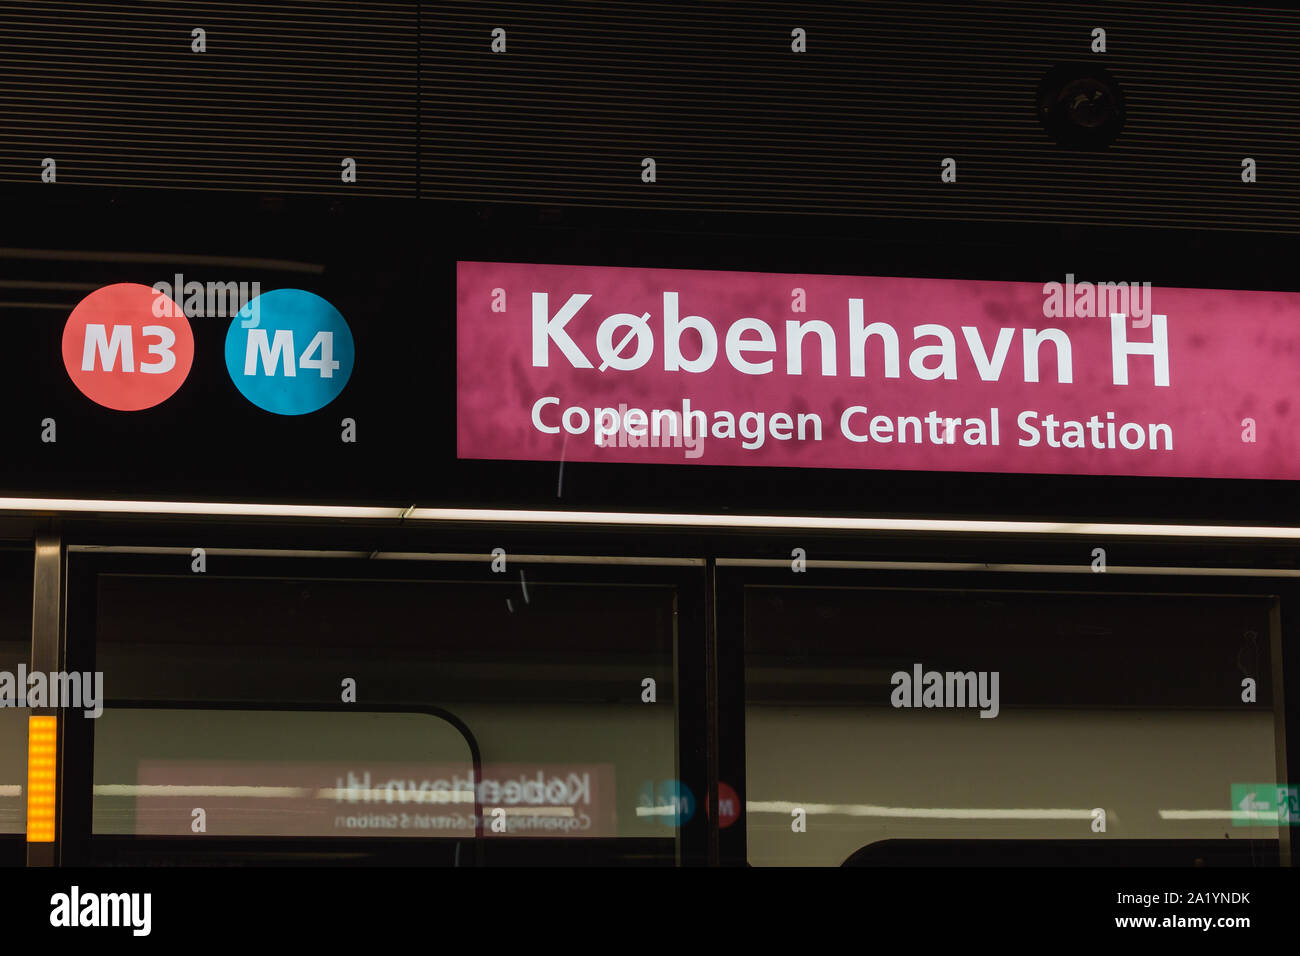 Copenhagen, Zealand Denmark - 29 9 2019: Copenhagen central metro station sign. Metro M3 M4 Cityringen line Stock Photo